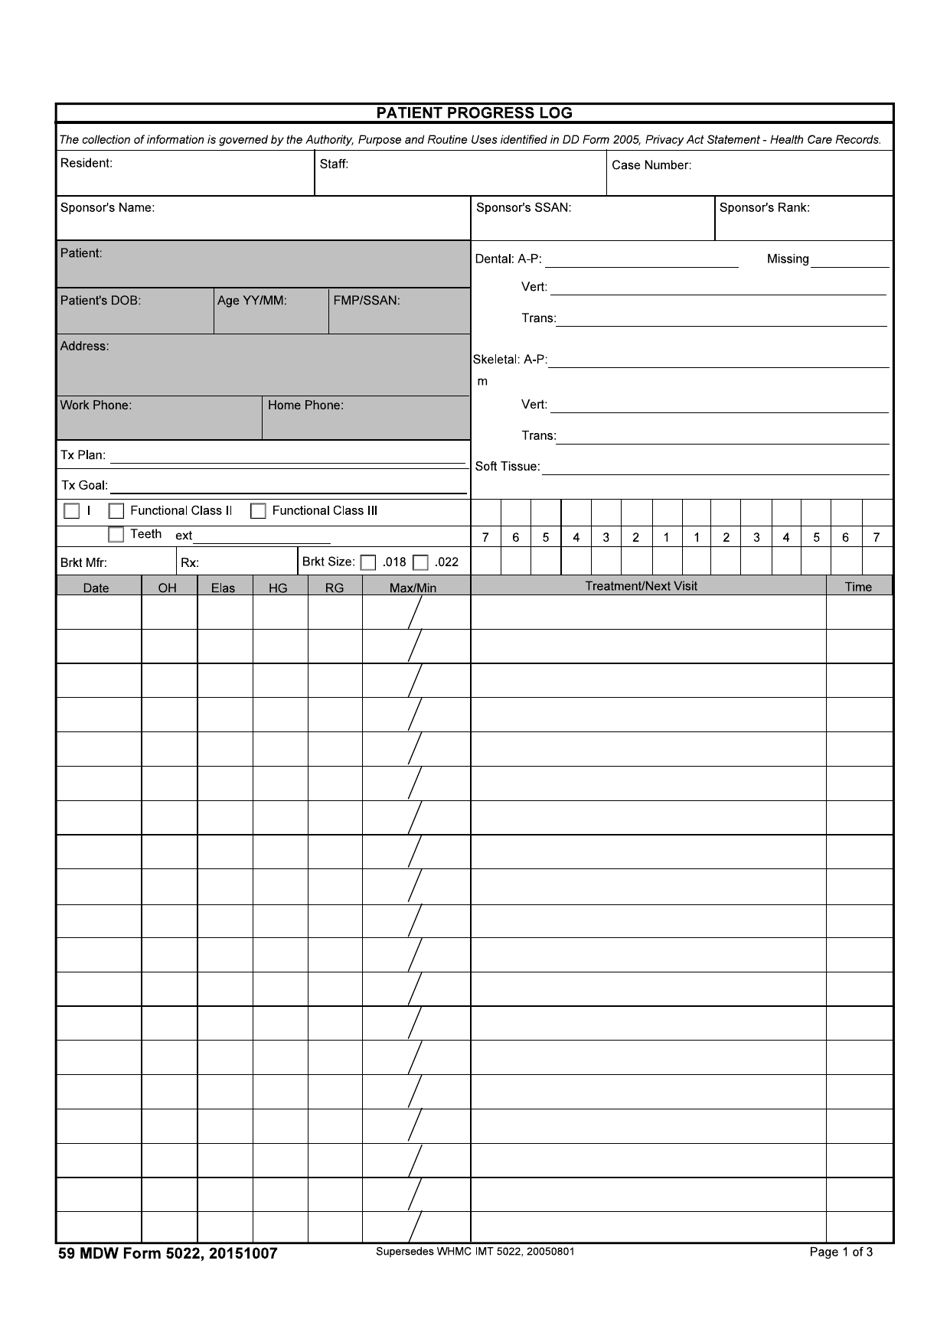 59 MDW Form 5022 Patient Progress Log, Page 1